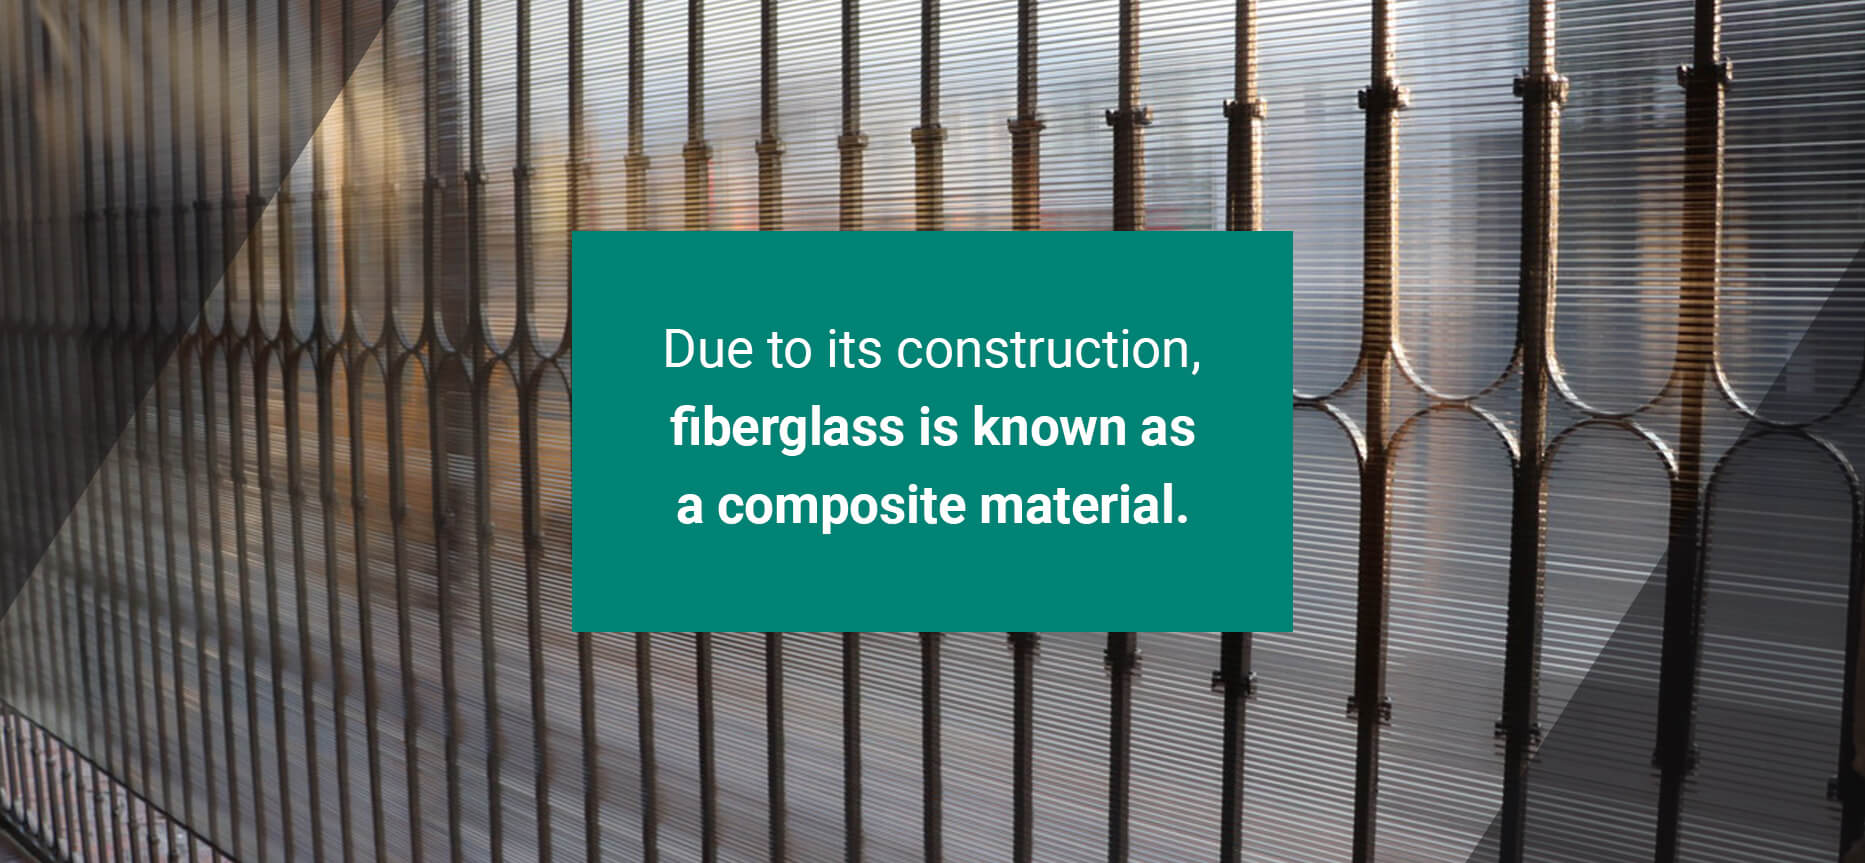 is fiberglass a composite or polymer